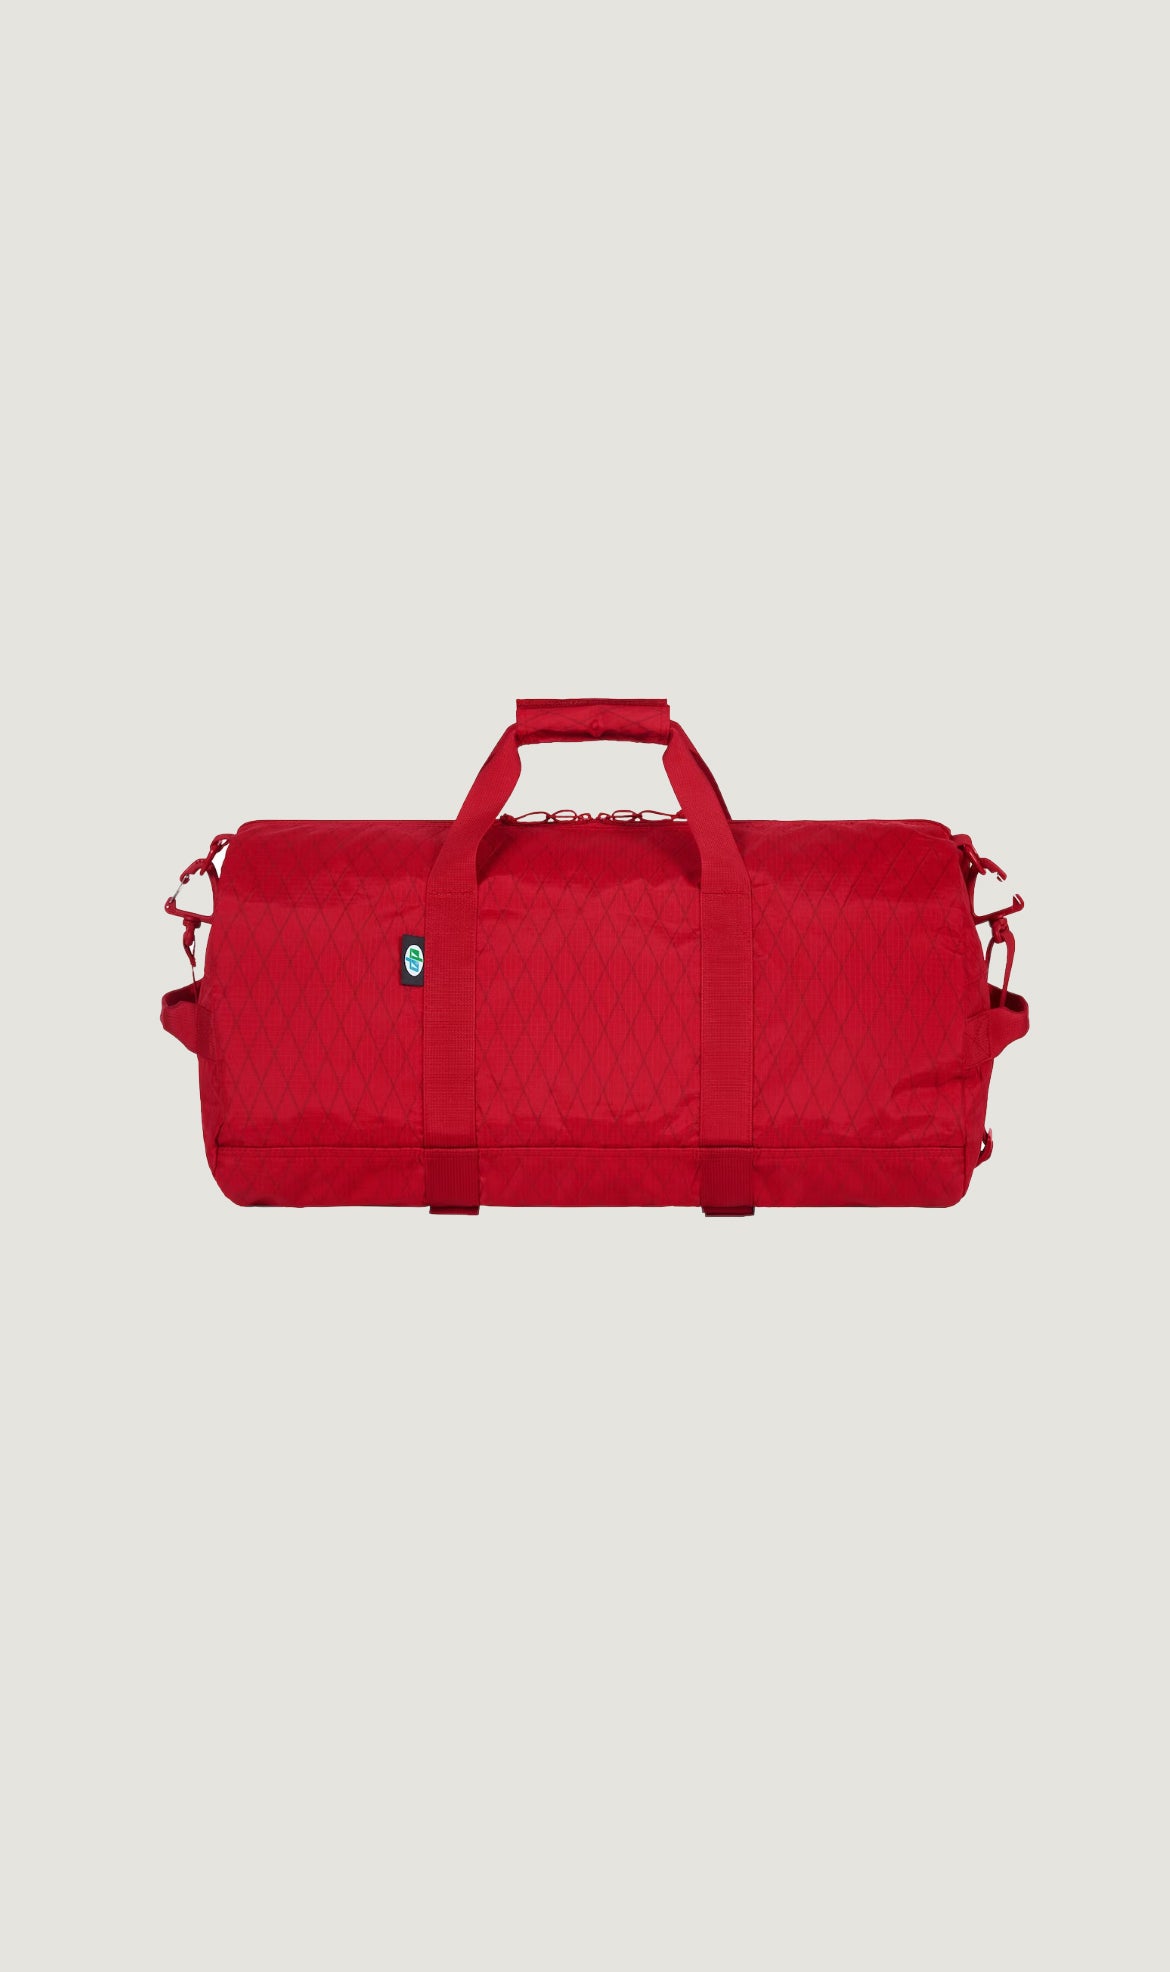 Supreme Duffle Bag Red Louis Vuitton